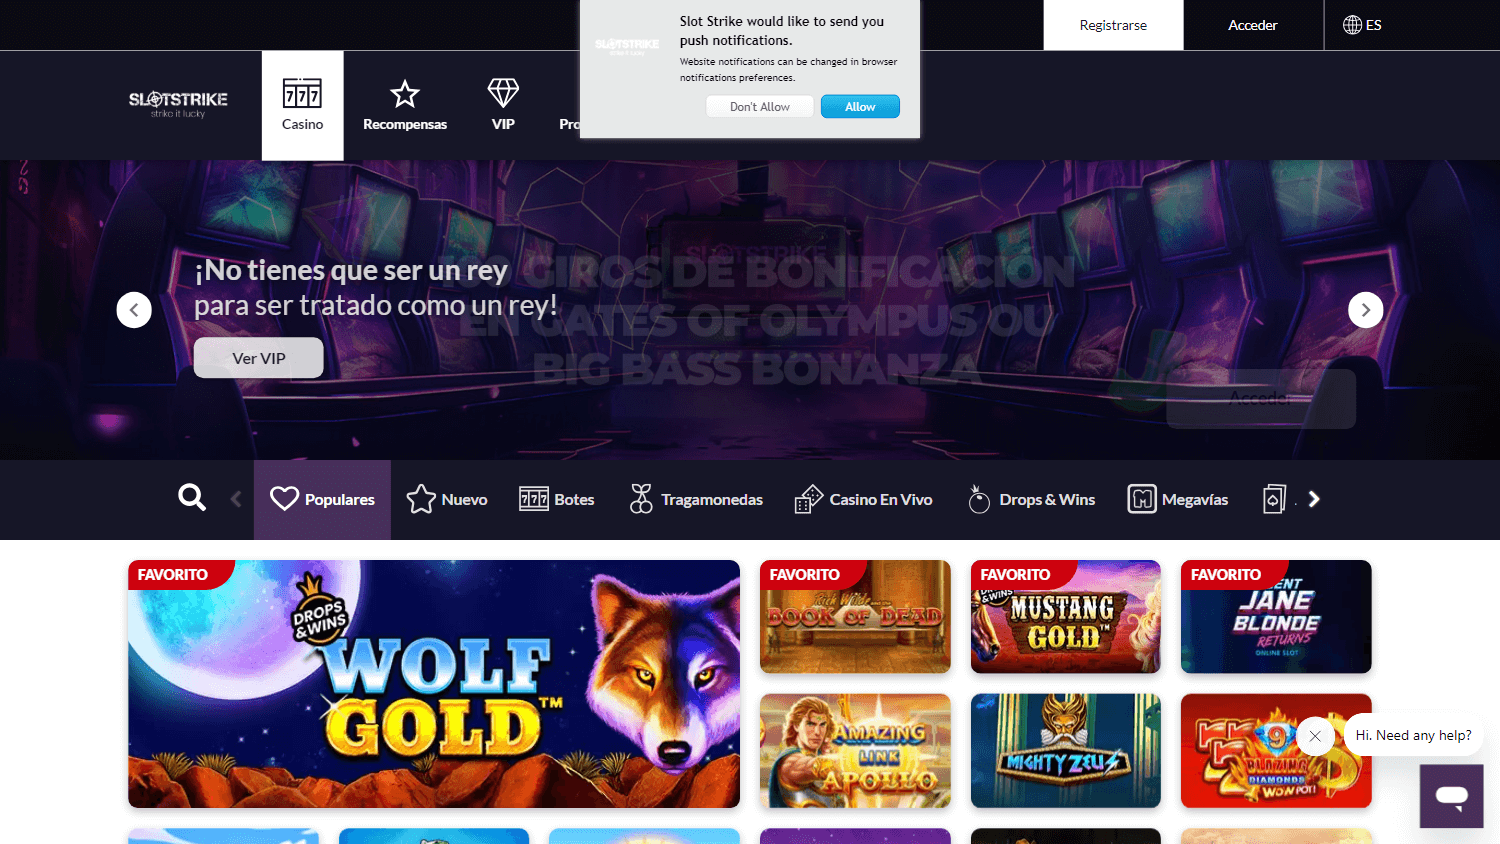 slot_strike_casino_homepage_desktop